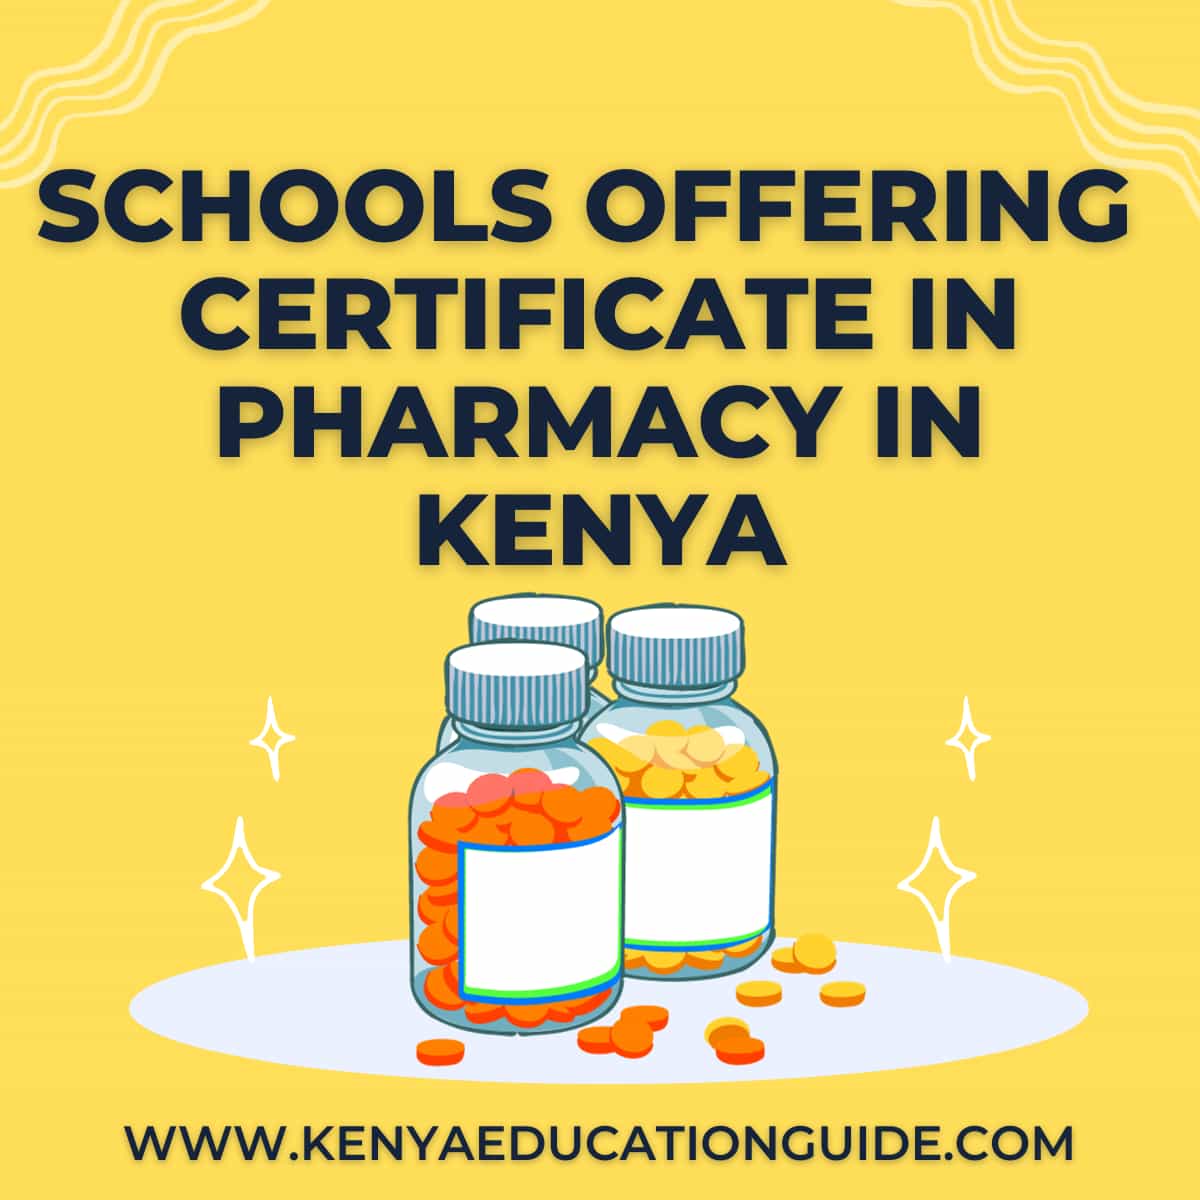 Schools Offering Certificate in Pharmacy in Kenya